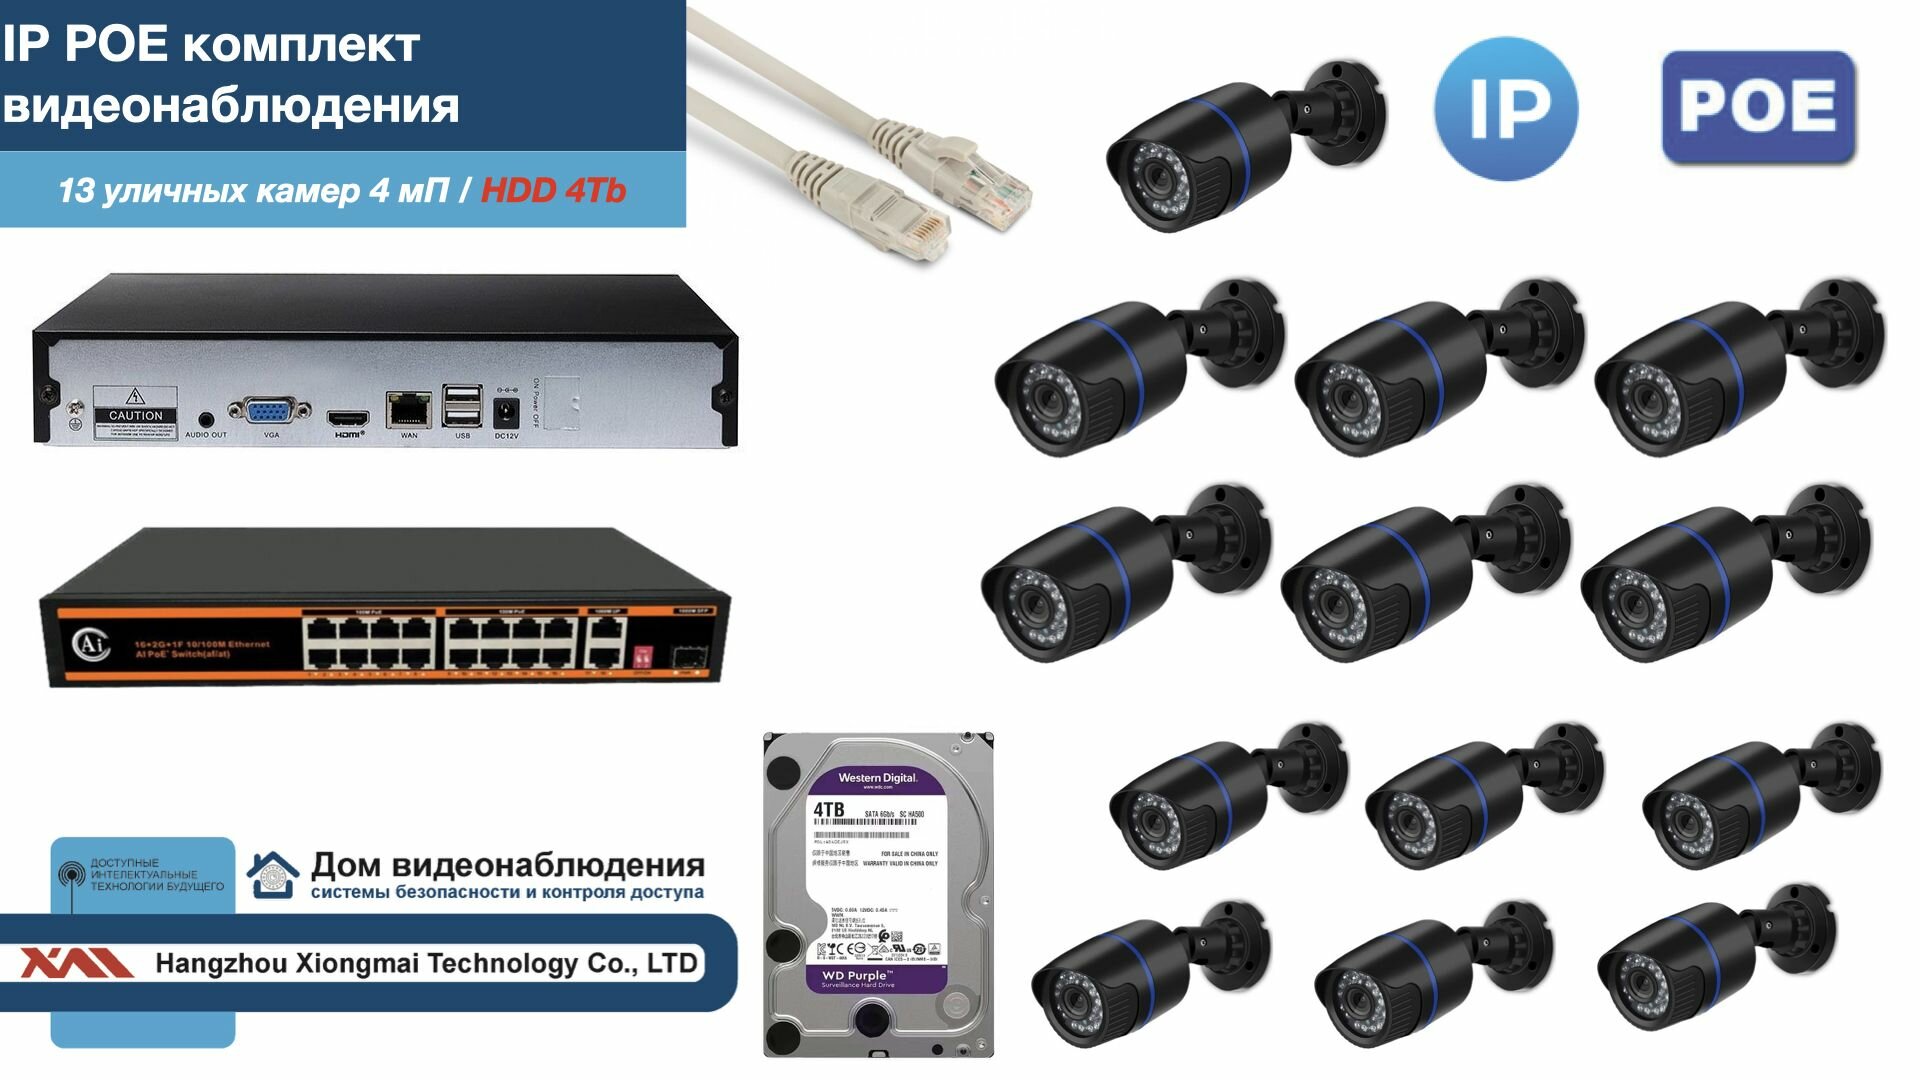 Полный IP POE комплект видеонаблюдения на 13 камер (KIT13IPPOE100B4MP-HDD4Tb)